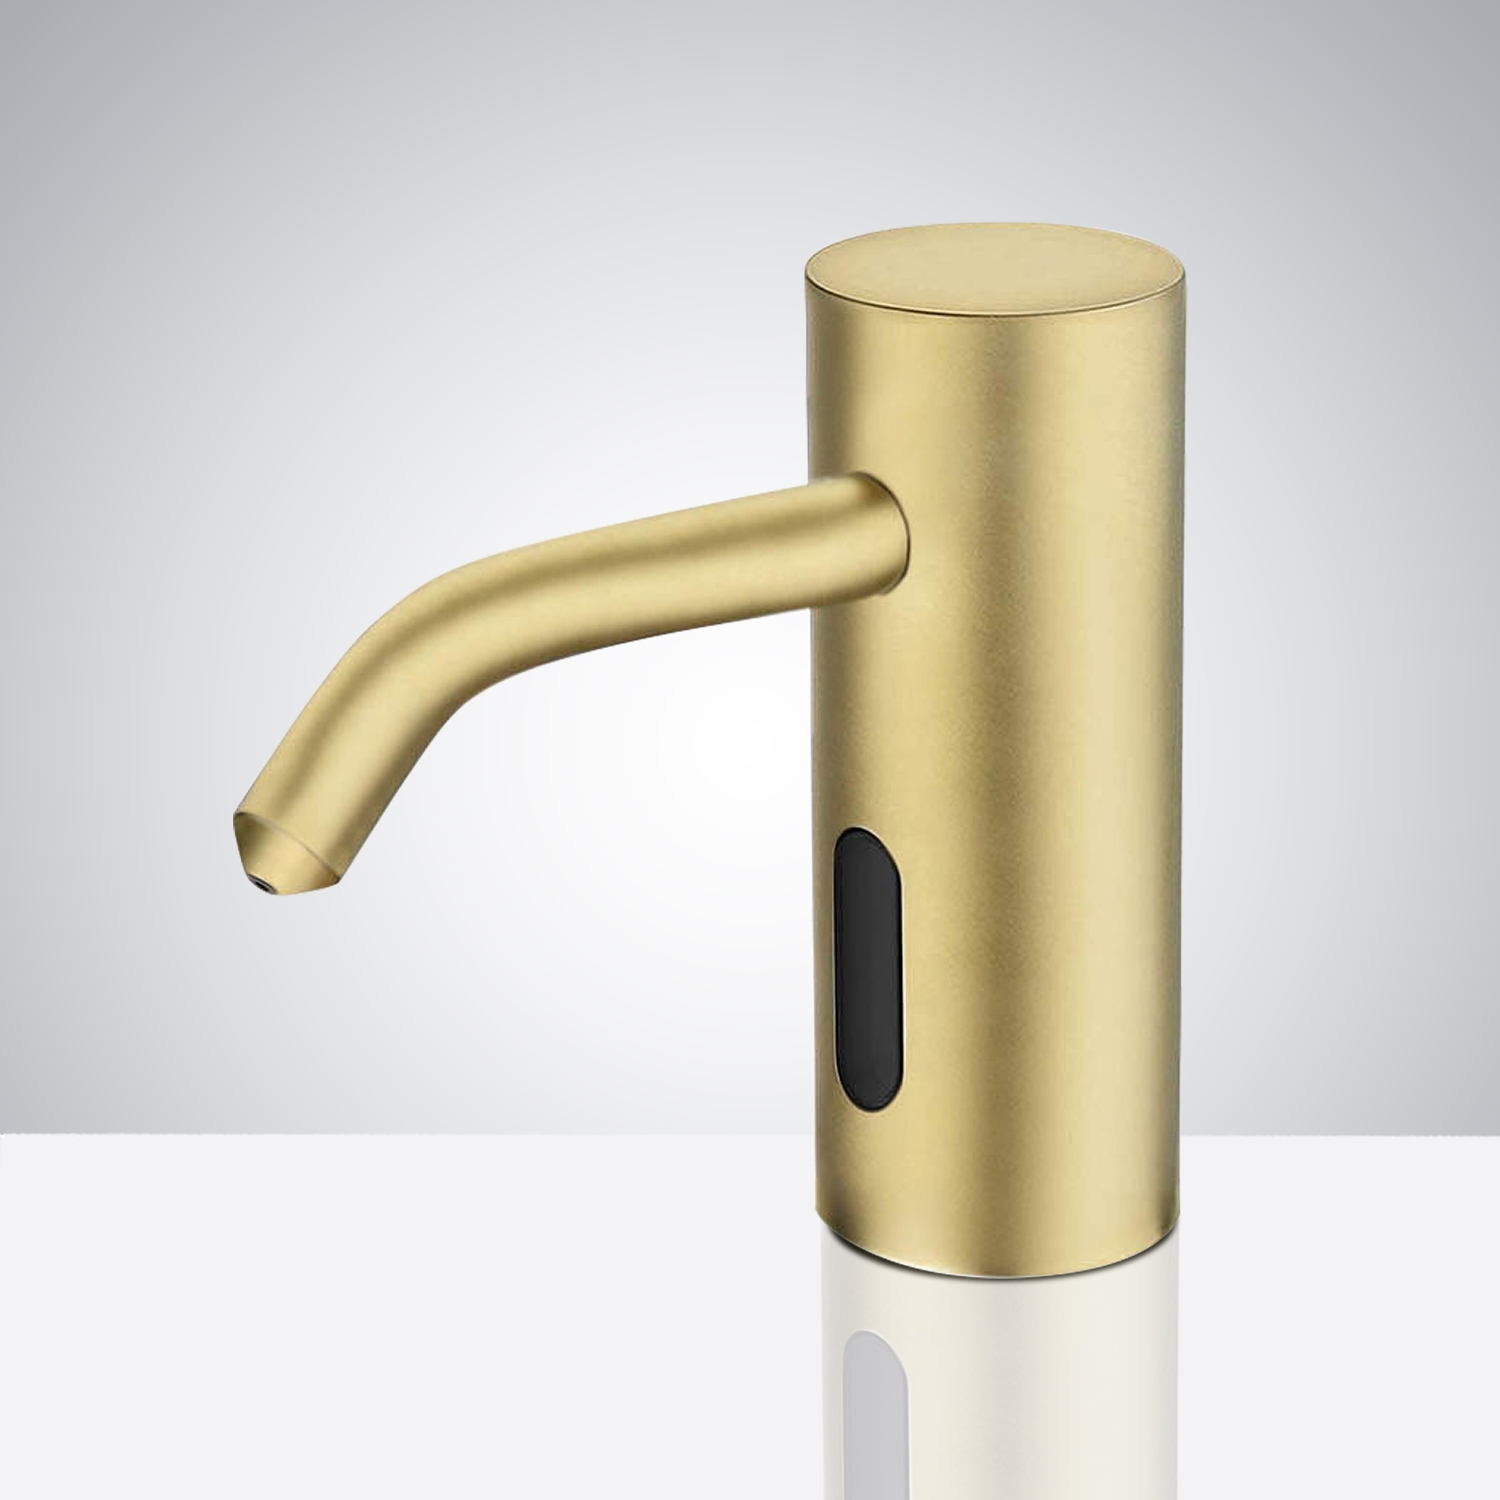 Fontana Trio Commercial Brushed Gold Brass Deck Mount Automatic Sensor Liquid Soap Dispenser